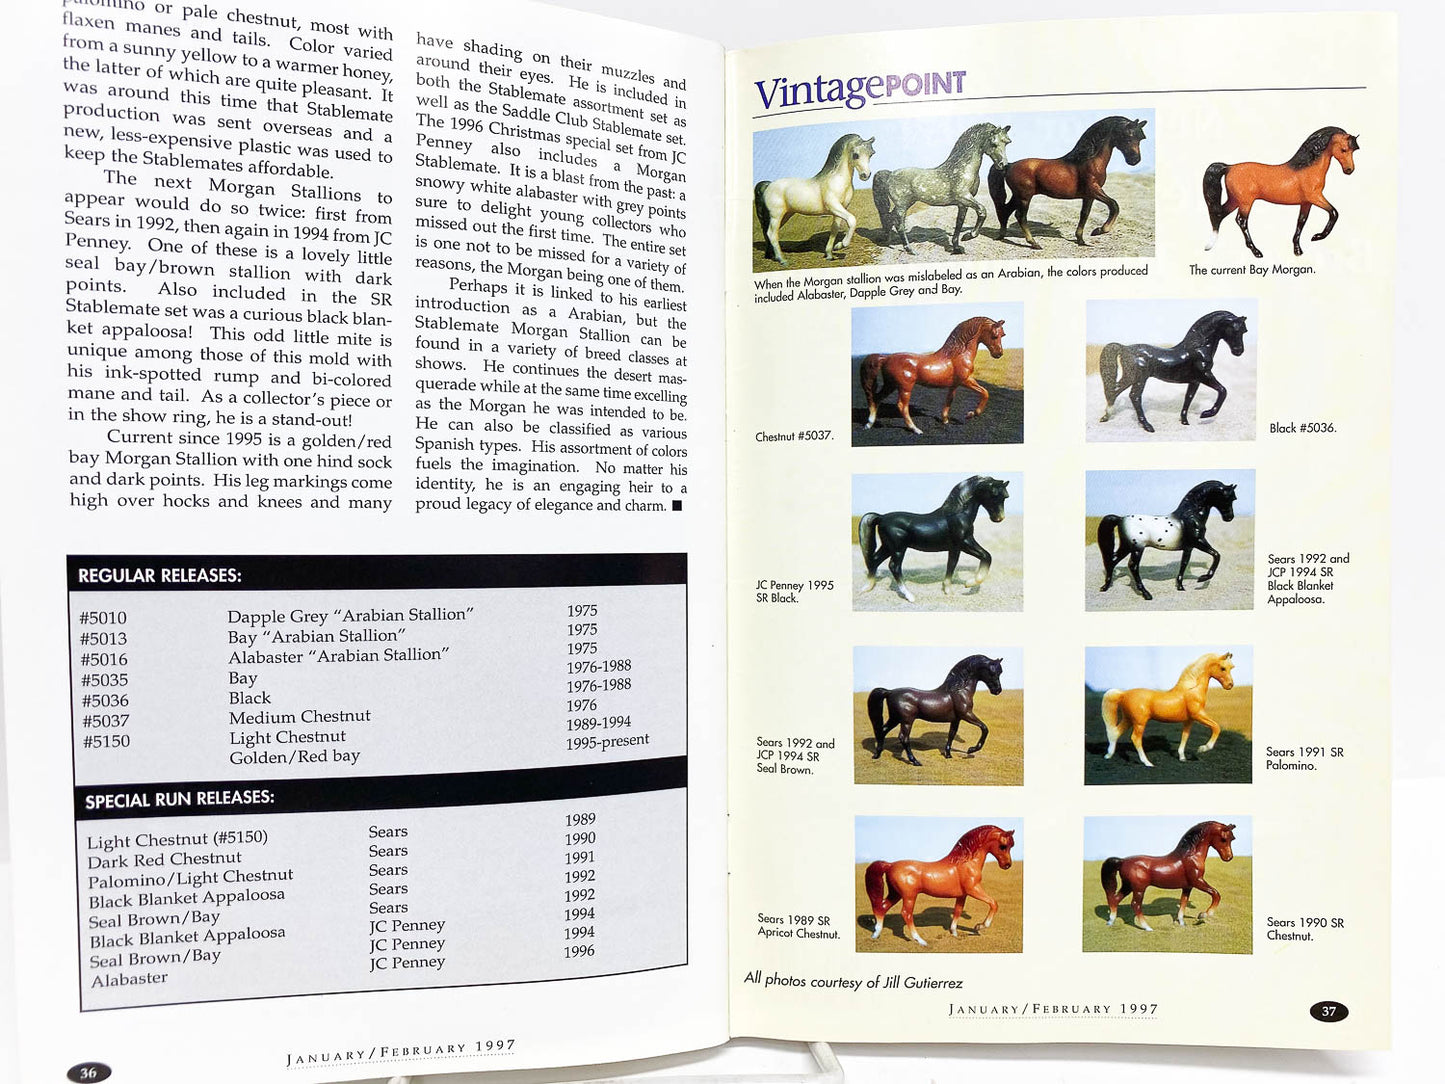 Just About Horses Magazine Vol. 24, No. 1, 1997 Jan/Feb